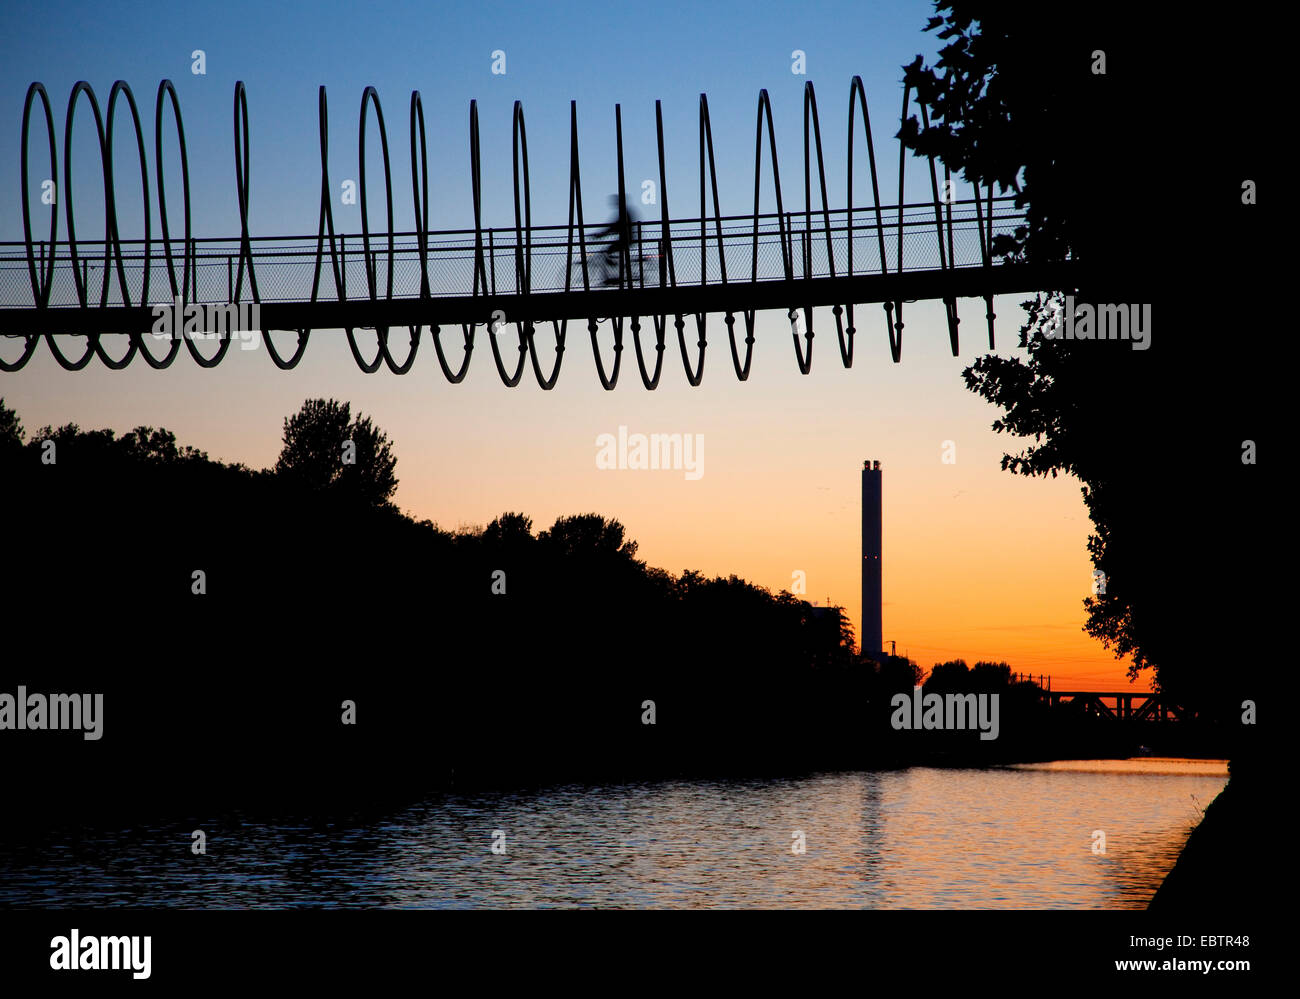 biker on the Slinky Slinky Springs to fame at sunset bridge over Rhein Herne Channel, Germany, North Rhine-Westphalia, Ruhr Area, Oberhausen Stock Photo